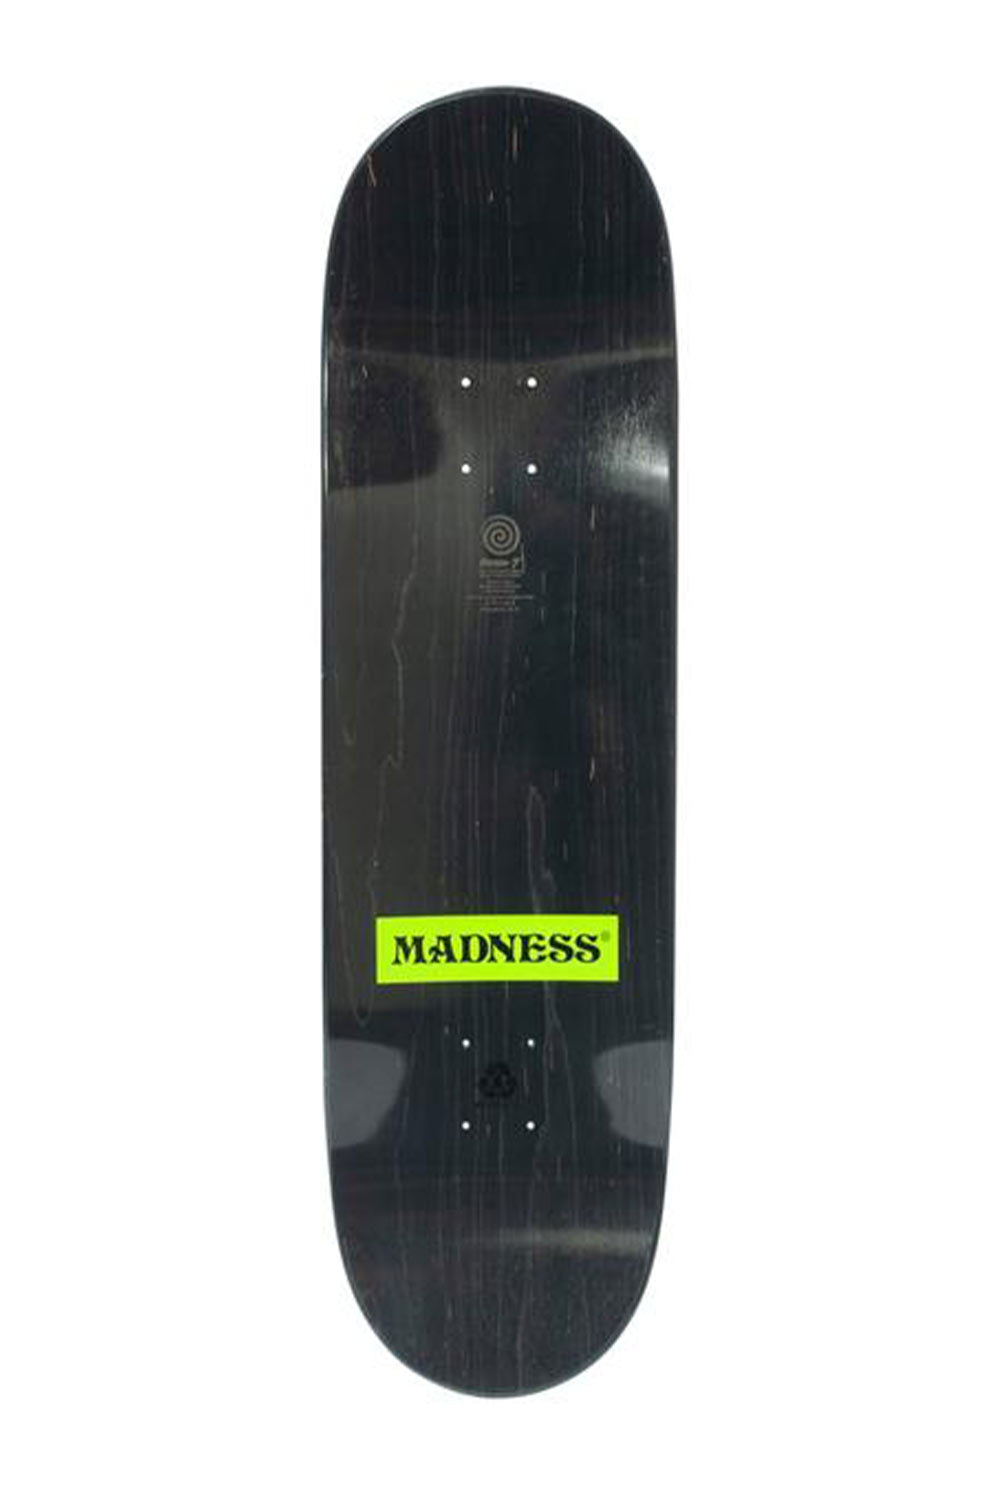 Madness Creeper R7 Skateboard Deck - 8.75"